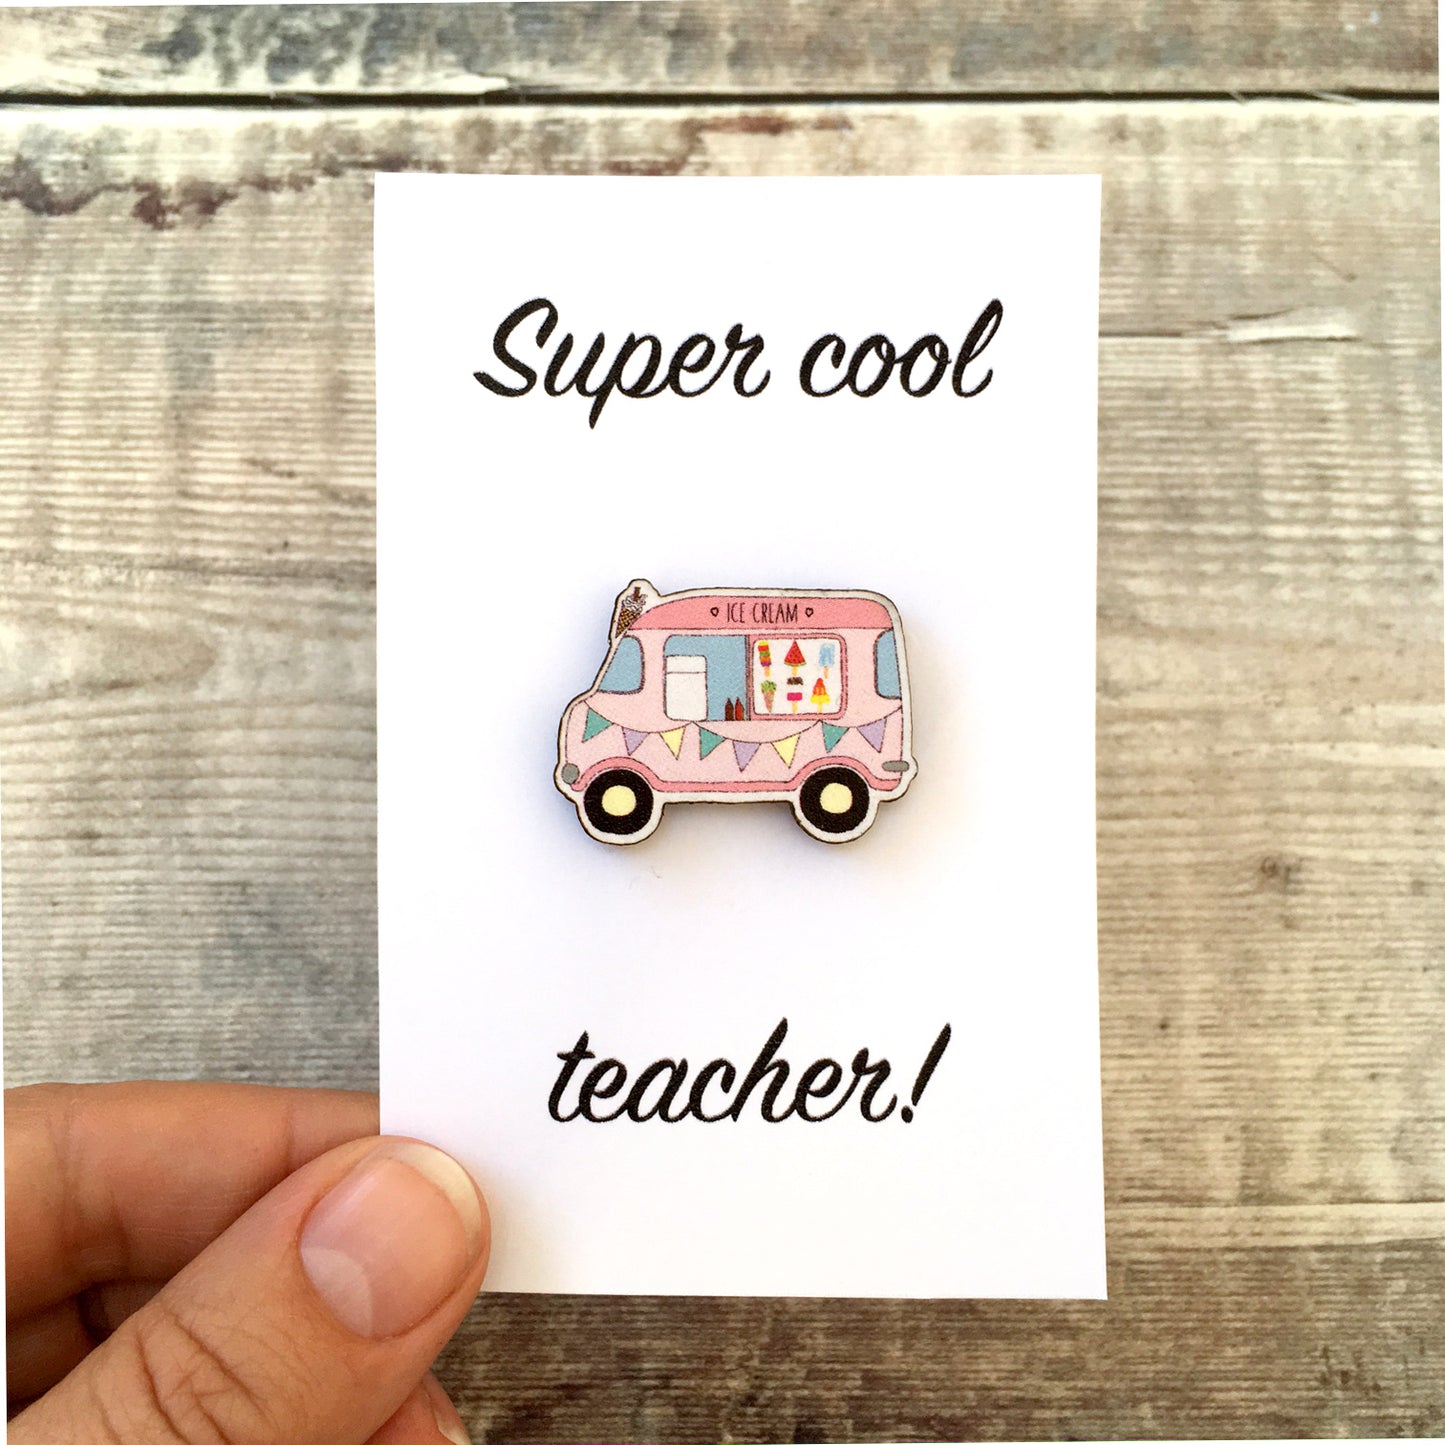 Super cool ice cream van teacher lapel pin gift